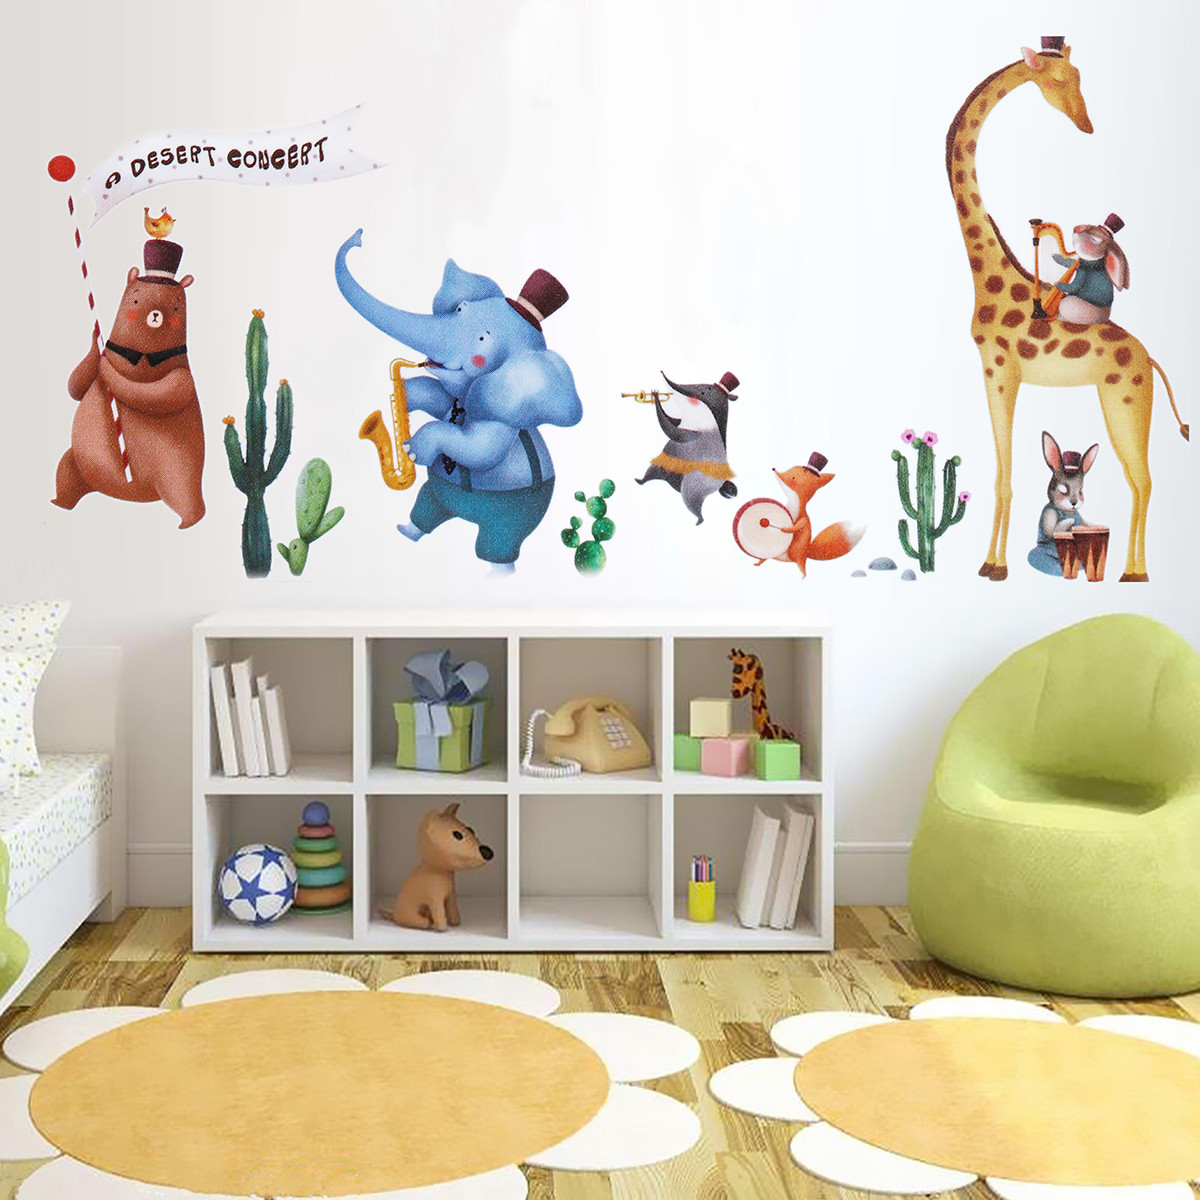 Walmart Baby Room Decor
 Cute DIY Wall Decals Elephant Animals Wall Sticker Decal